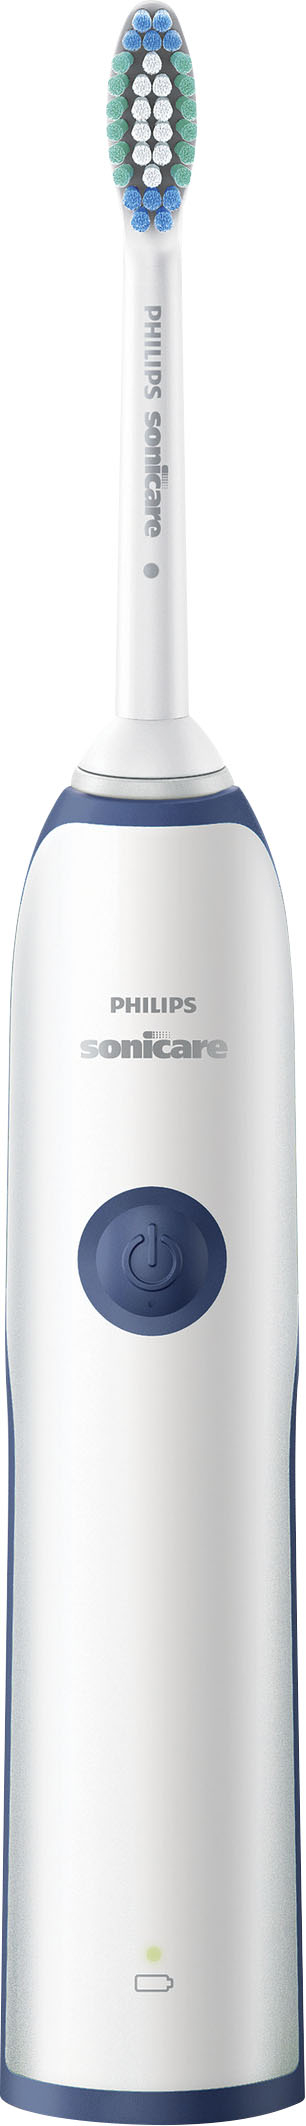 Left View: Philips Sonicare - Sonicare UV Sanitizer